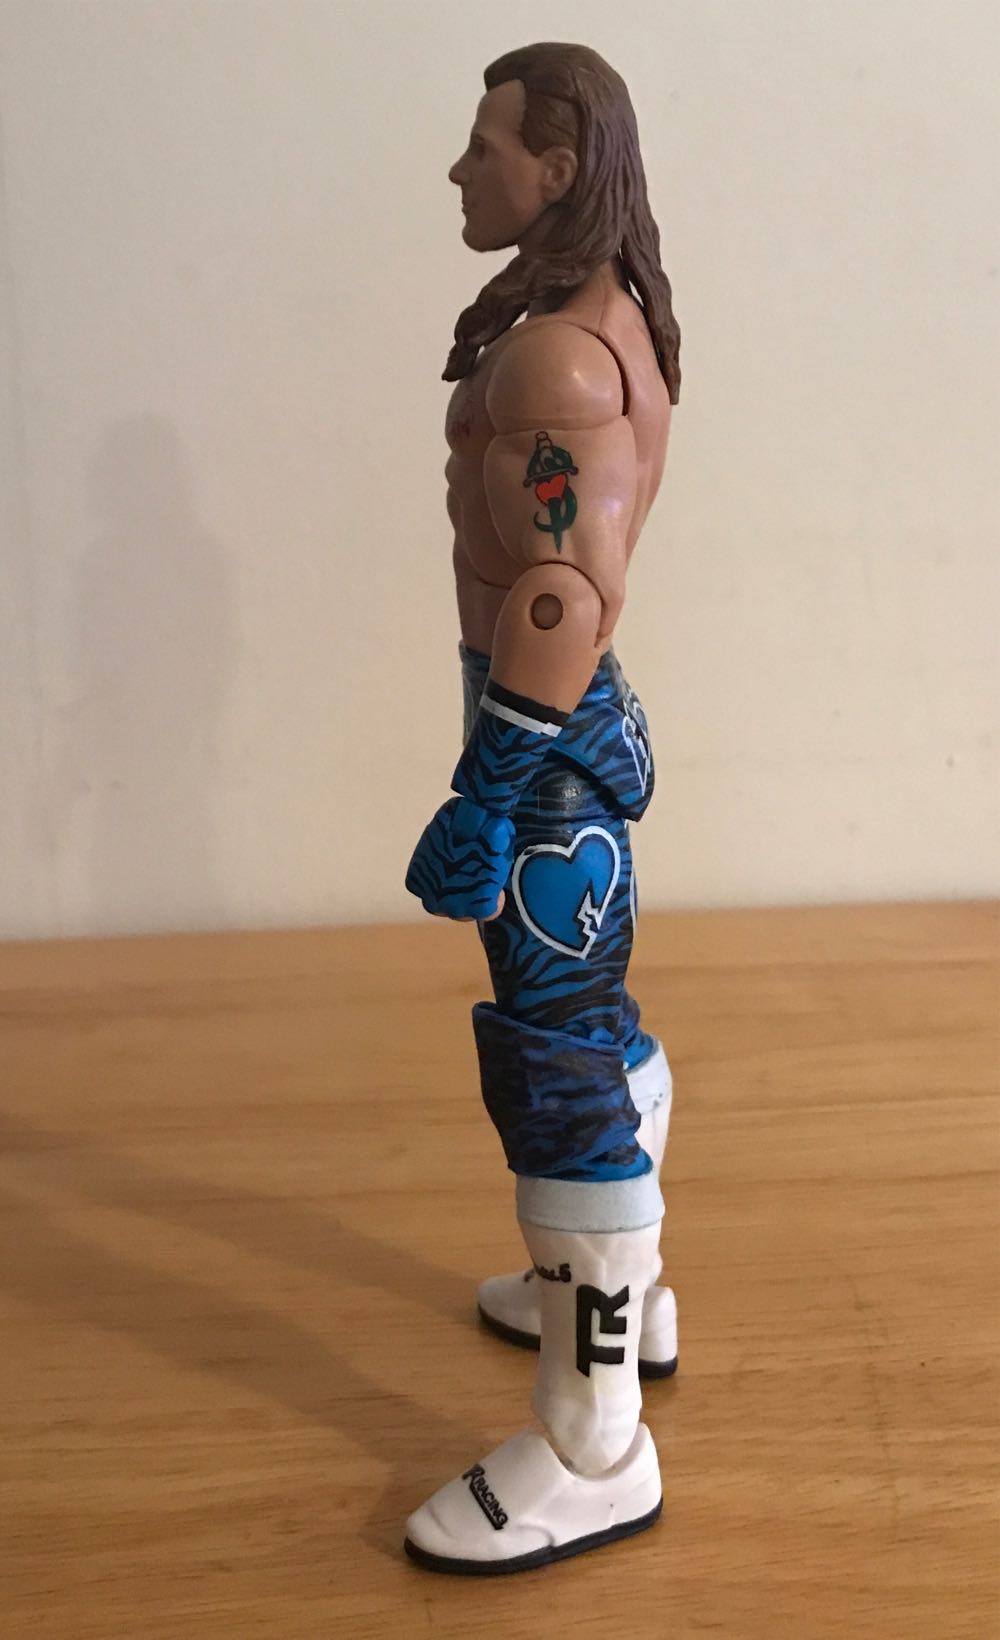 Shawn Michaels - Mattel Wwe (WWE Elite Custom Shawn Michaels) action figure collectible - Main Image 2